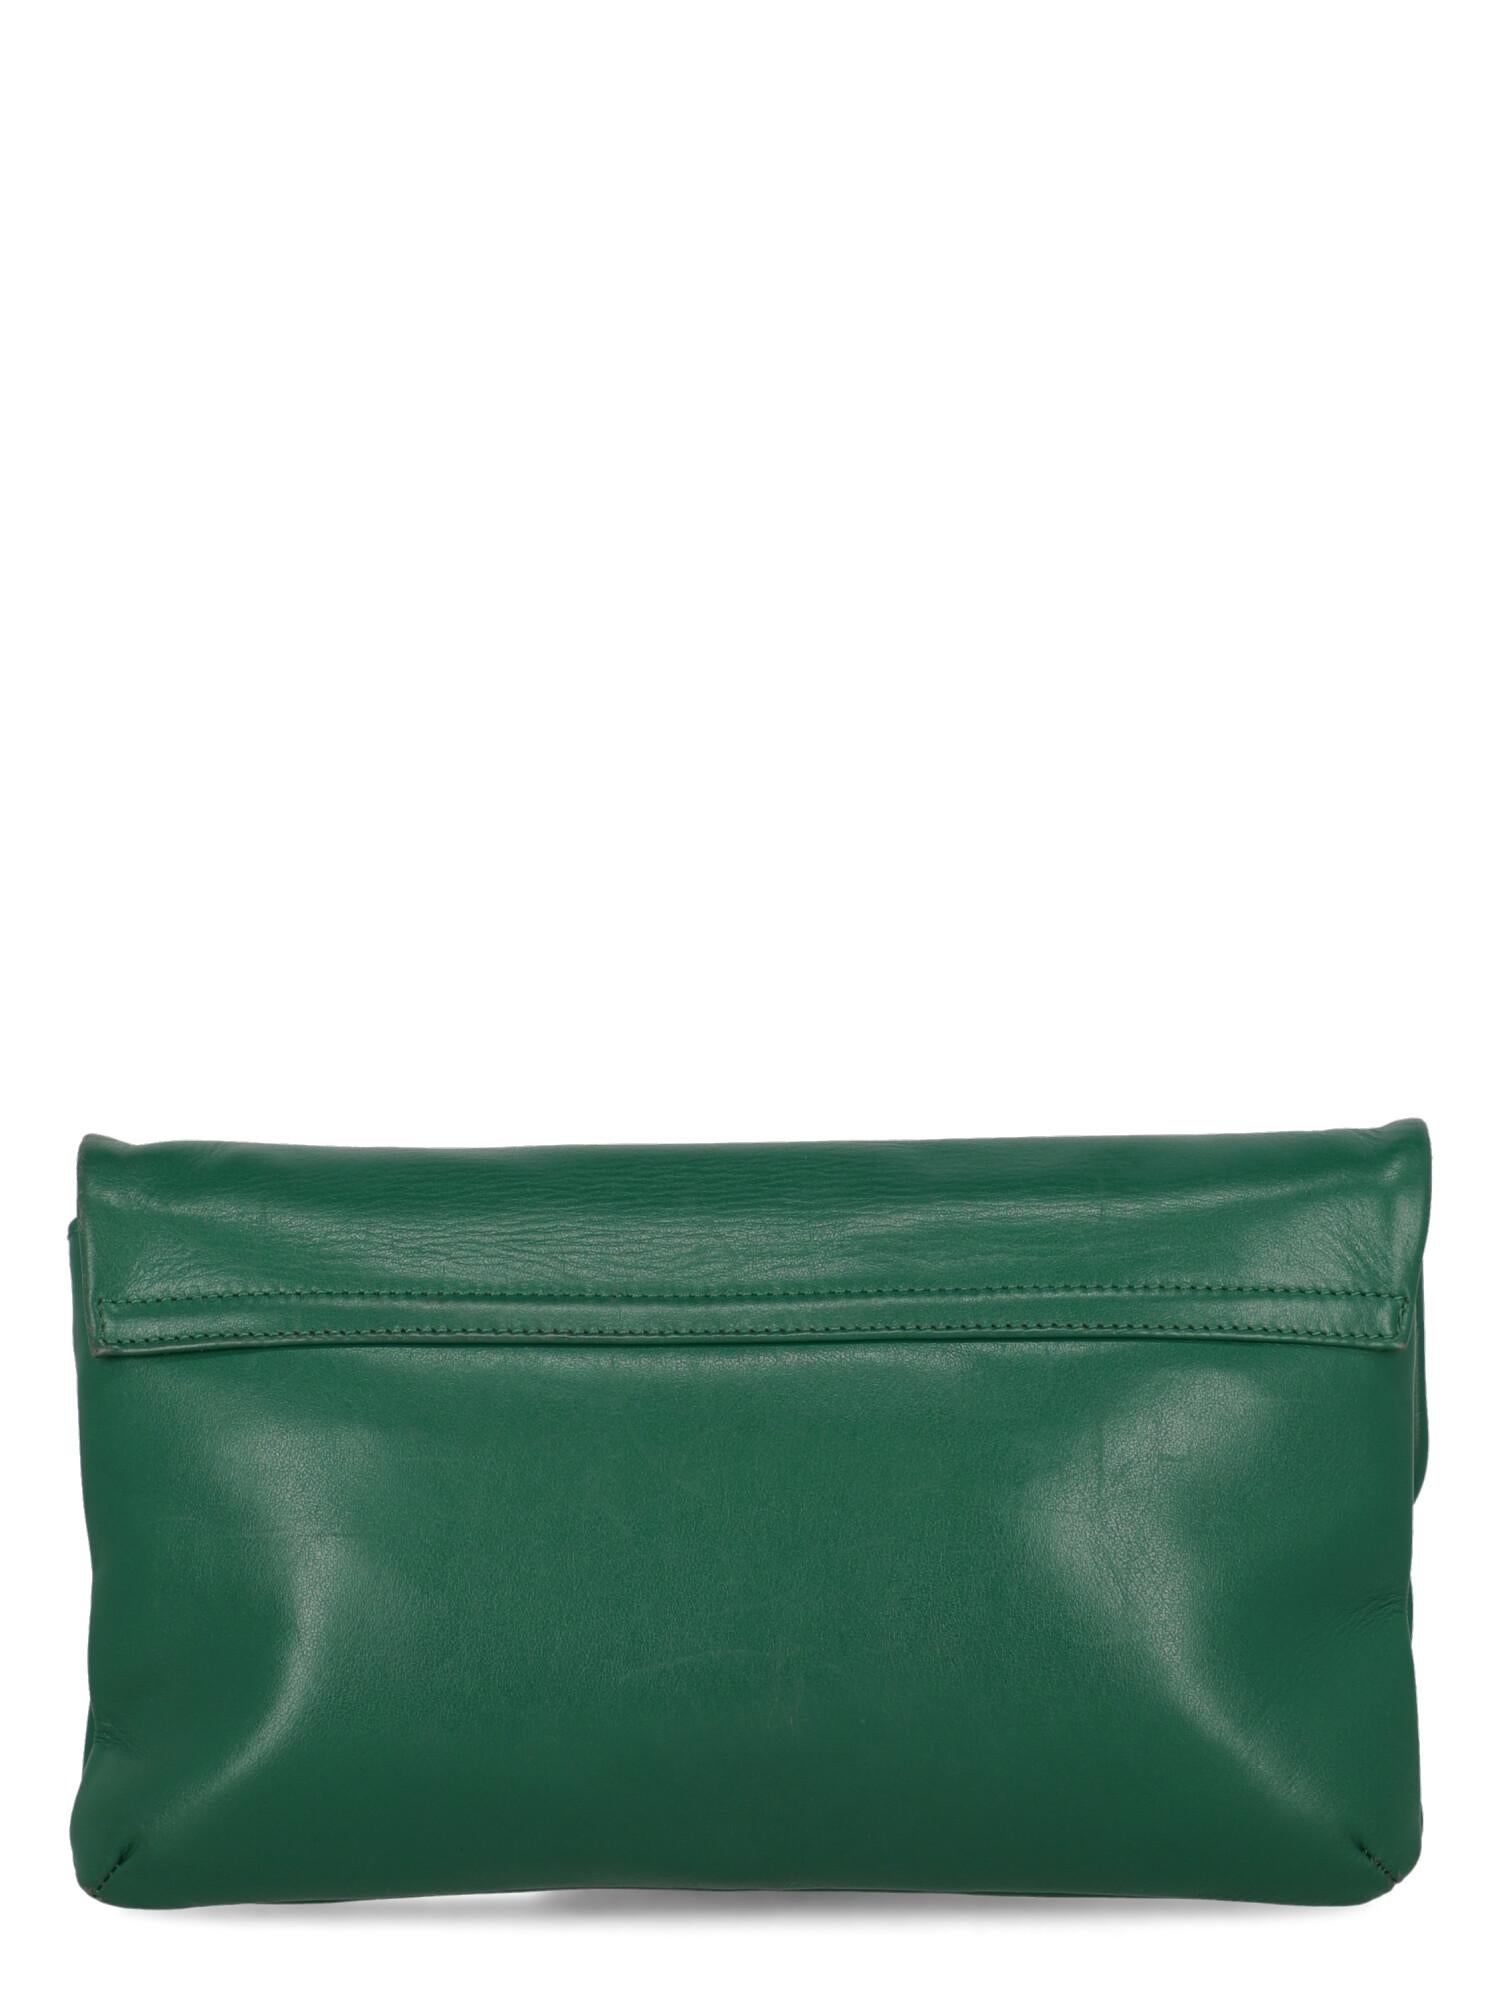 Women's Sara Battaglia Woman Shoulder bag  Green Leather For Sale